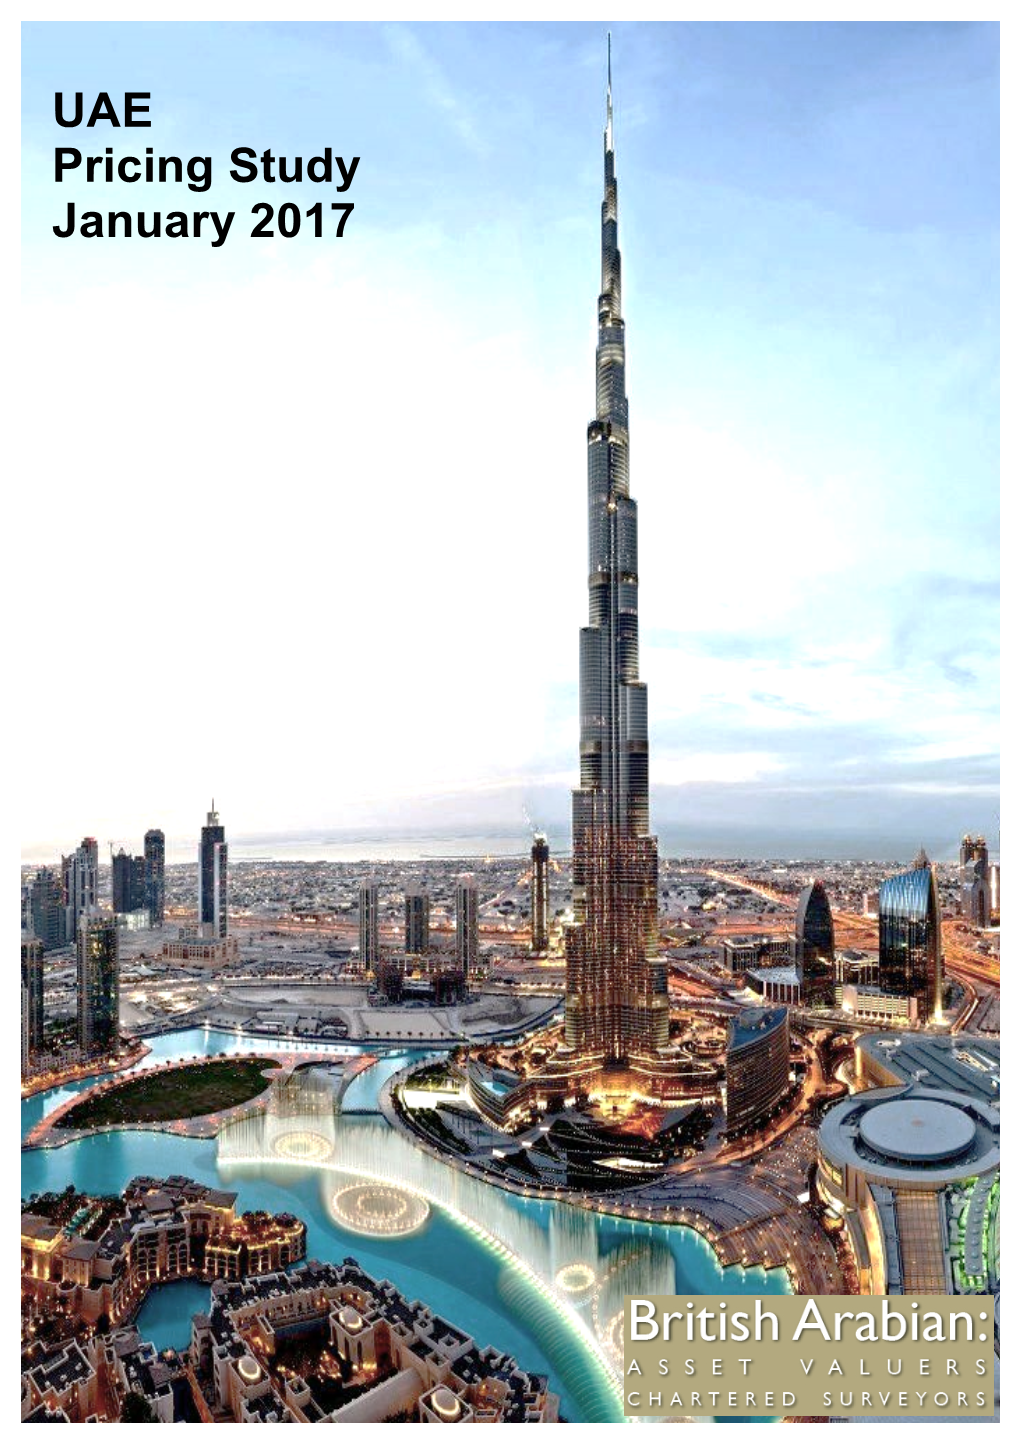 UAE Pricing Study January 2017